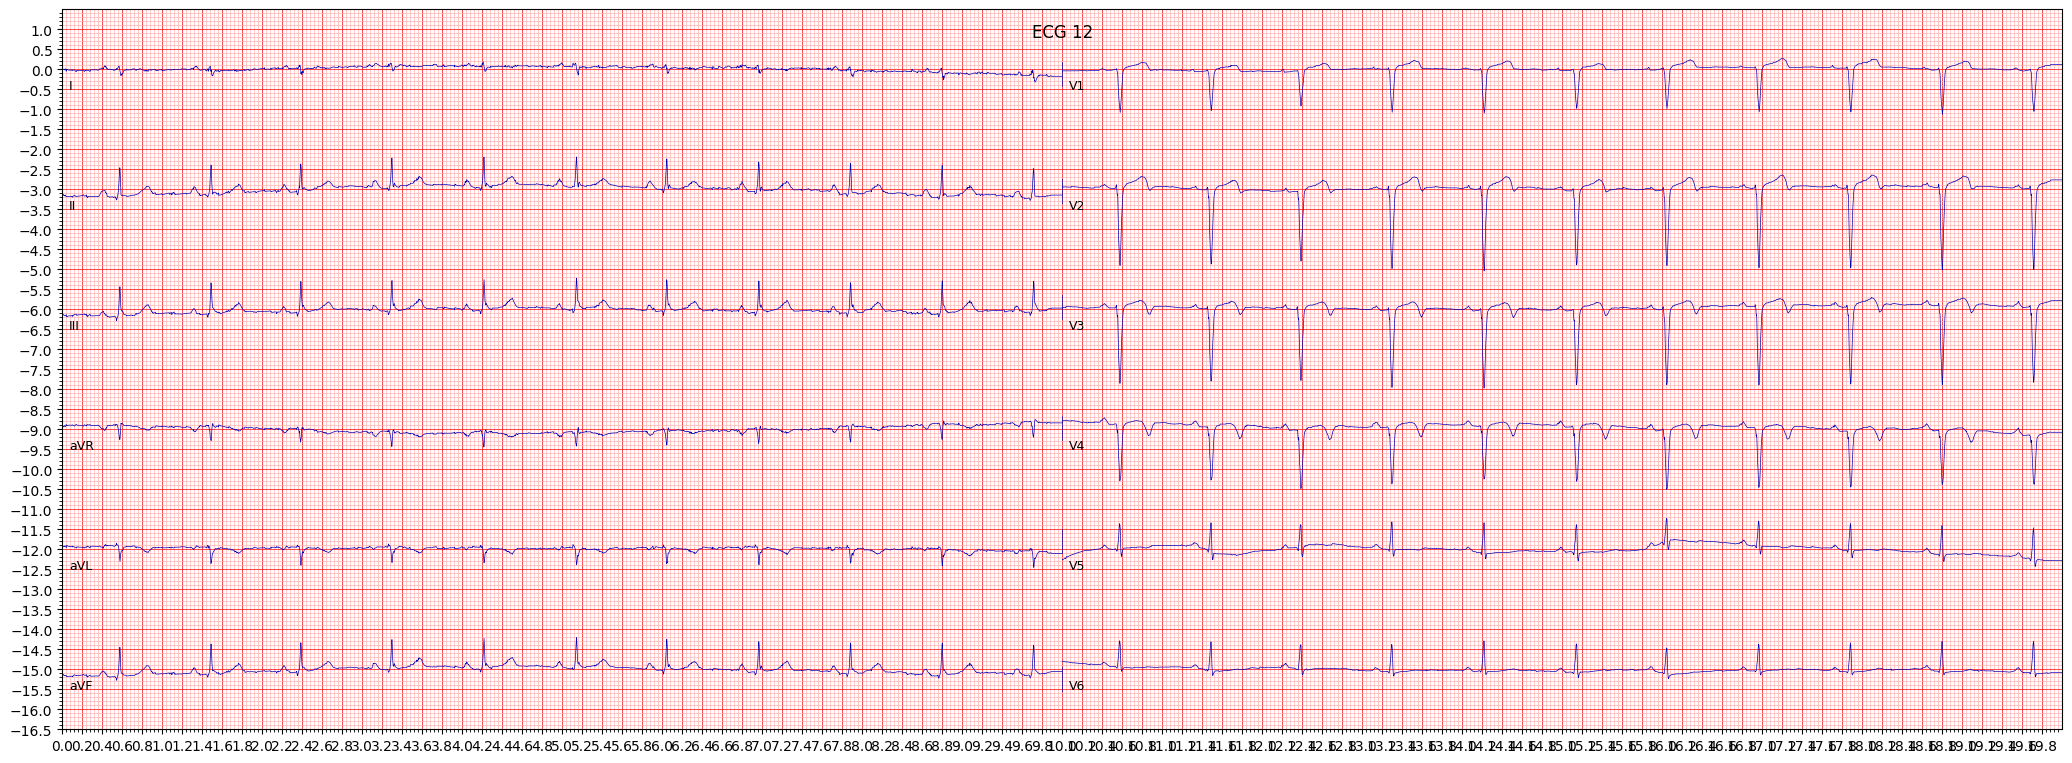 anteroseptal myocardial infarction (ASMI) example 1440